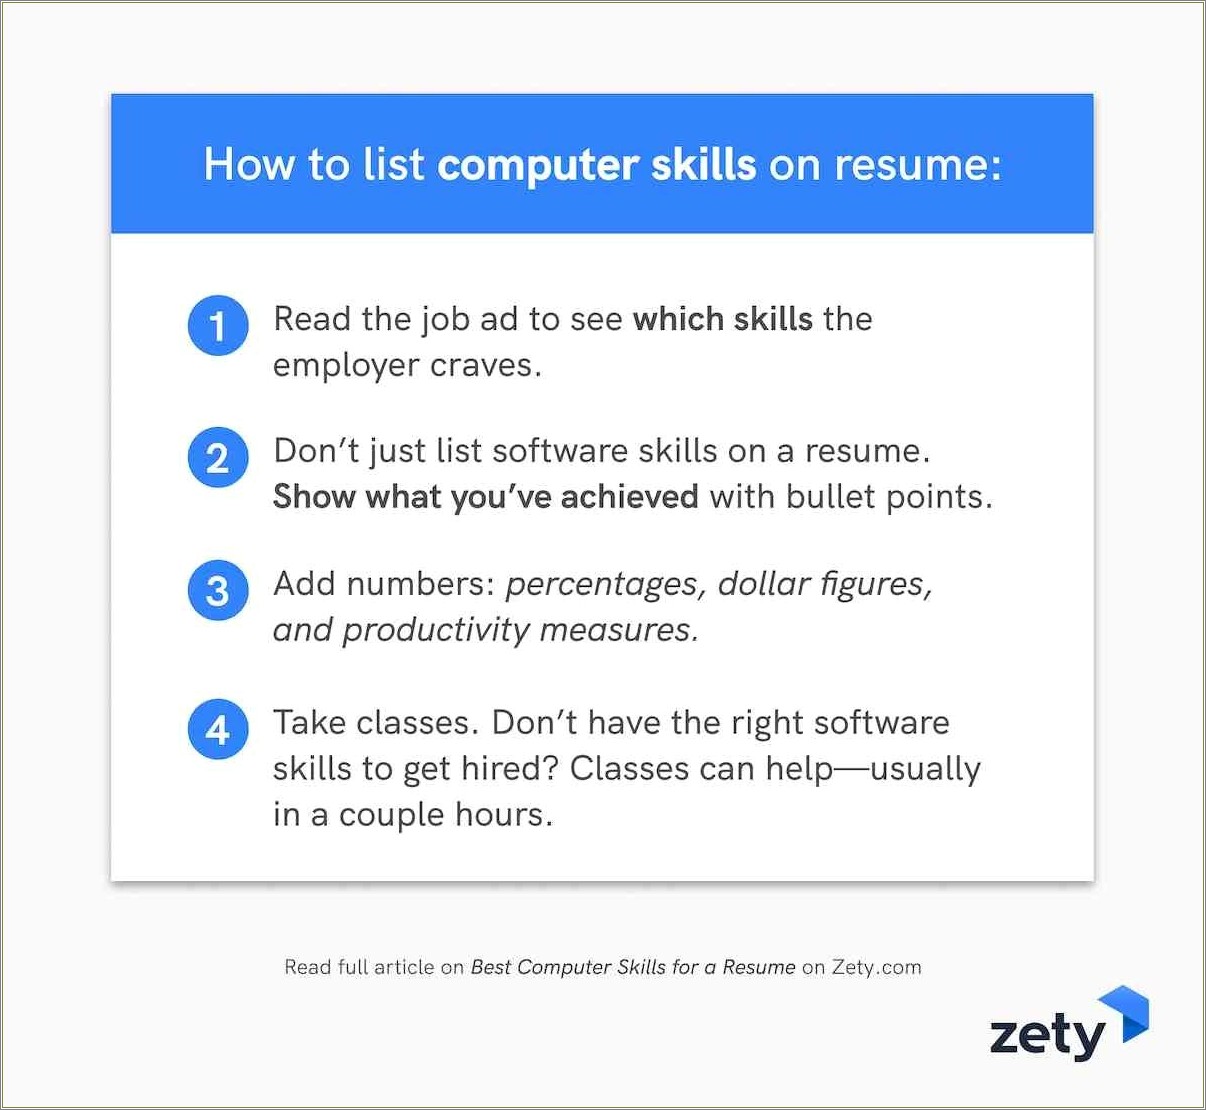 Important Computer Skills To List On Resume